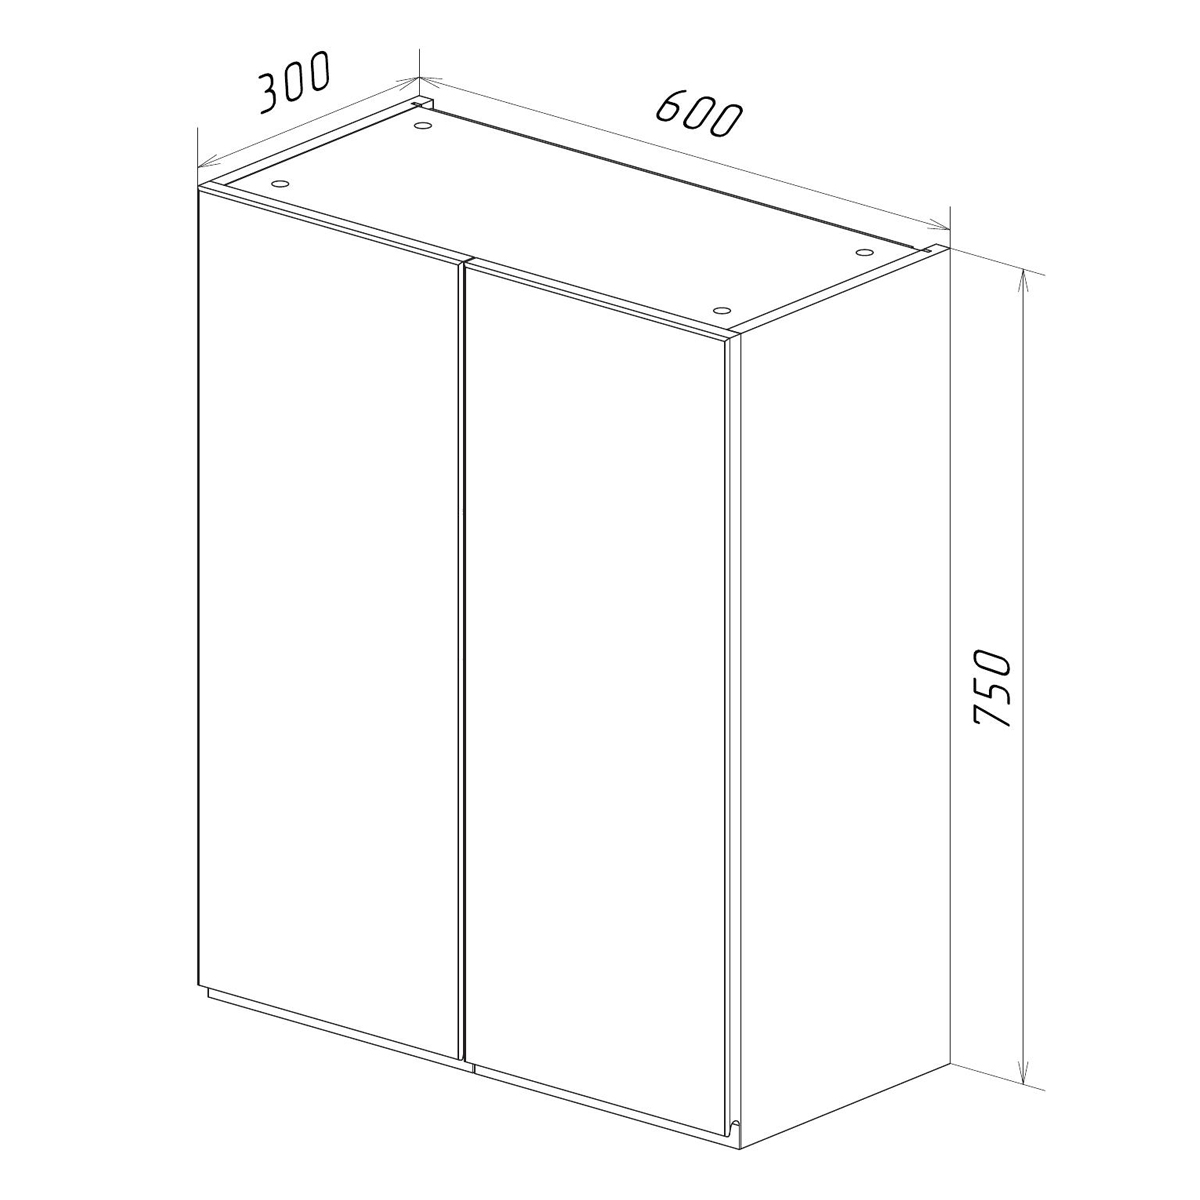 Шкаф Lemark VEON 60 см подвесной, 2-х дверный, цвет корпуса, фасада: Белый глянец